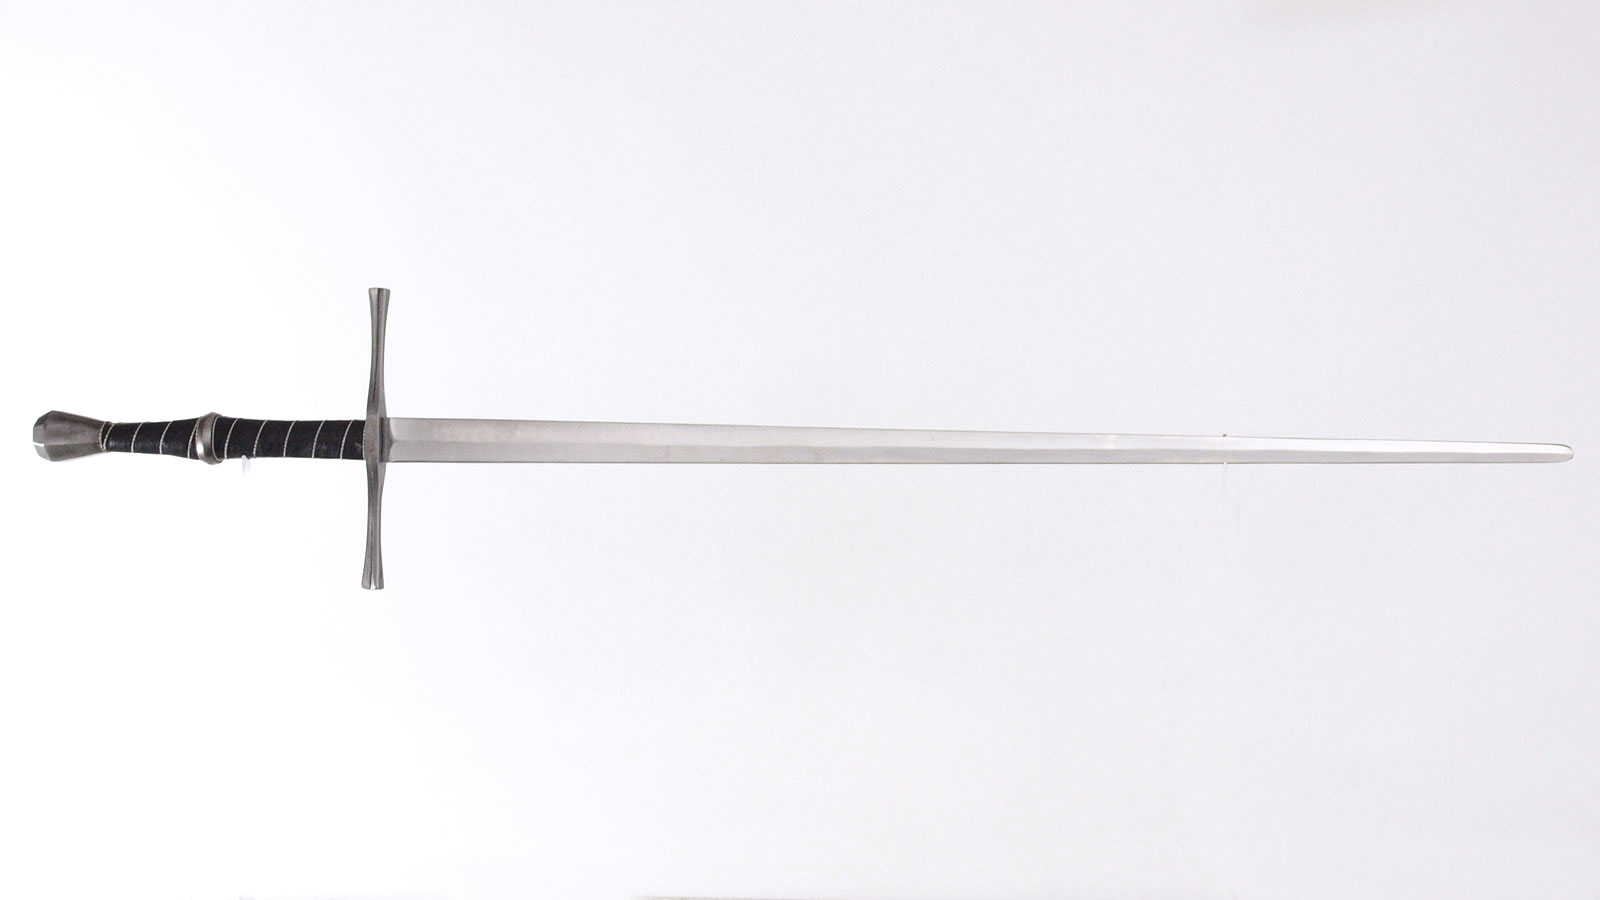 Long Bastard Sword, Slim Blade